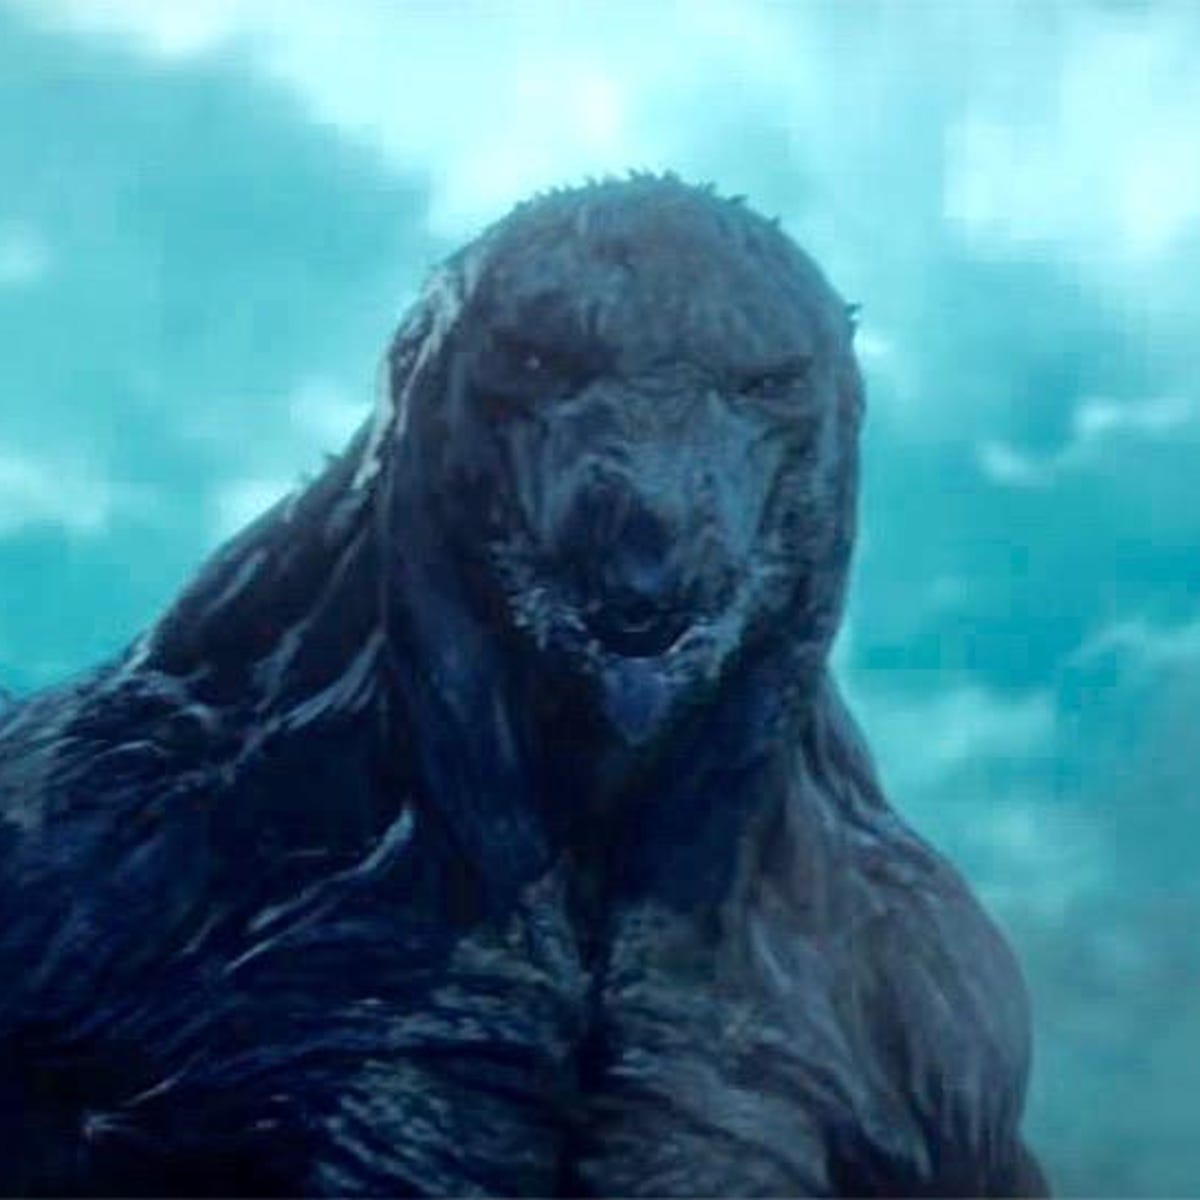 Godzilla battles robots in 'Monster Planet' anime trailer - CNET